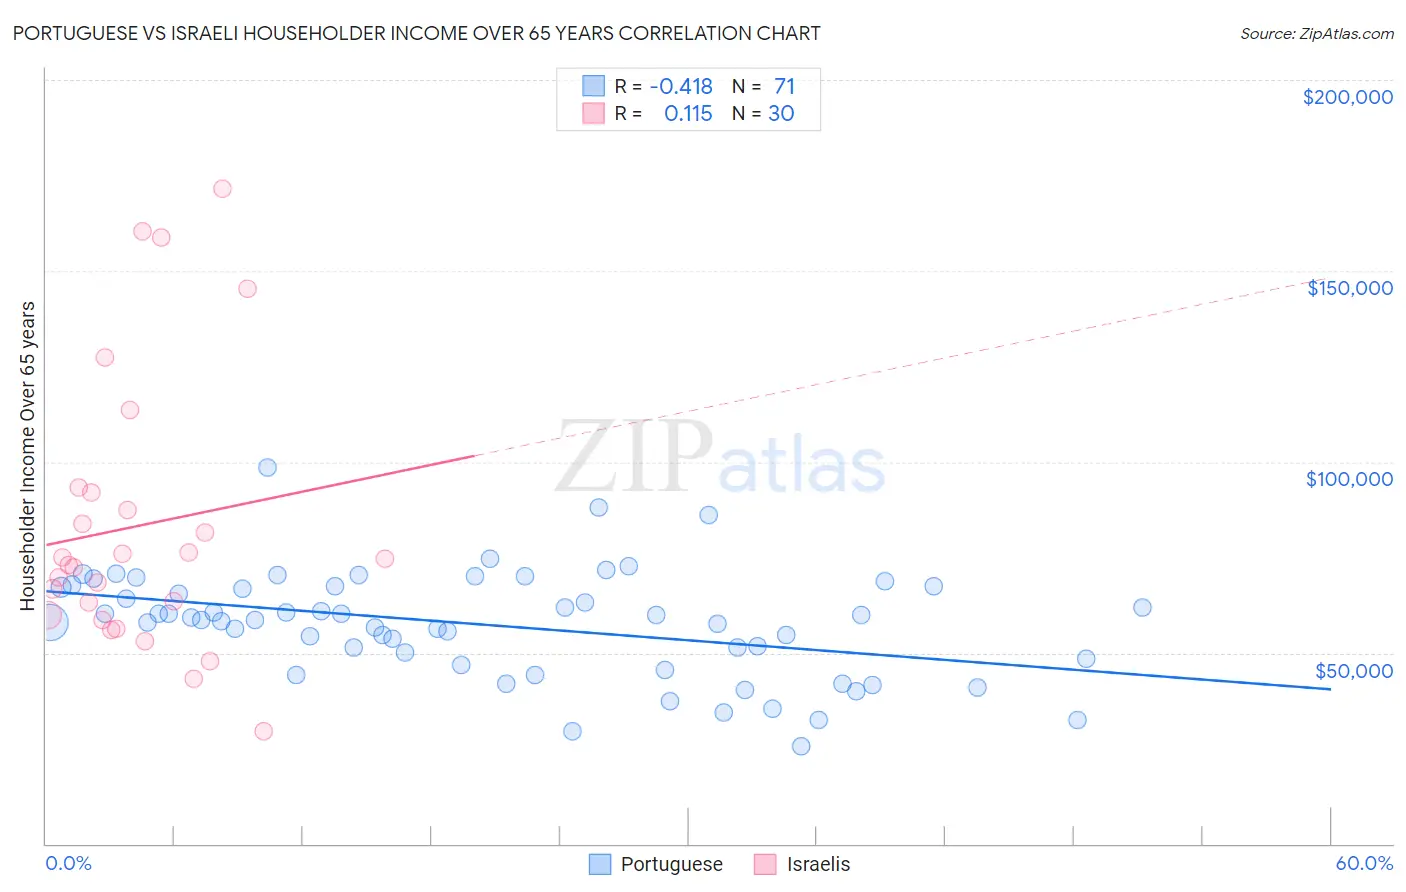 Portuguese vs Israeli Householder Income Over 65 years